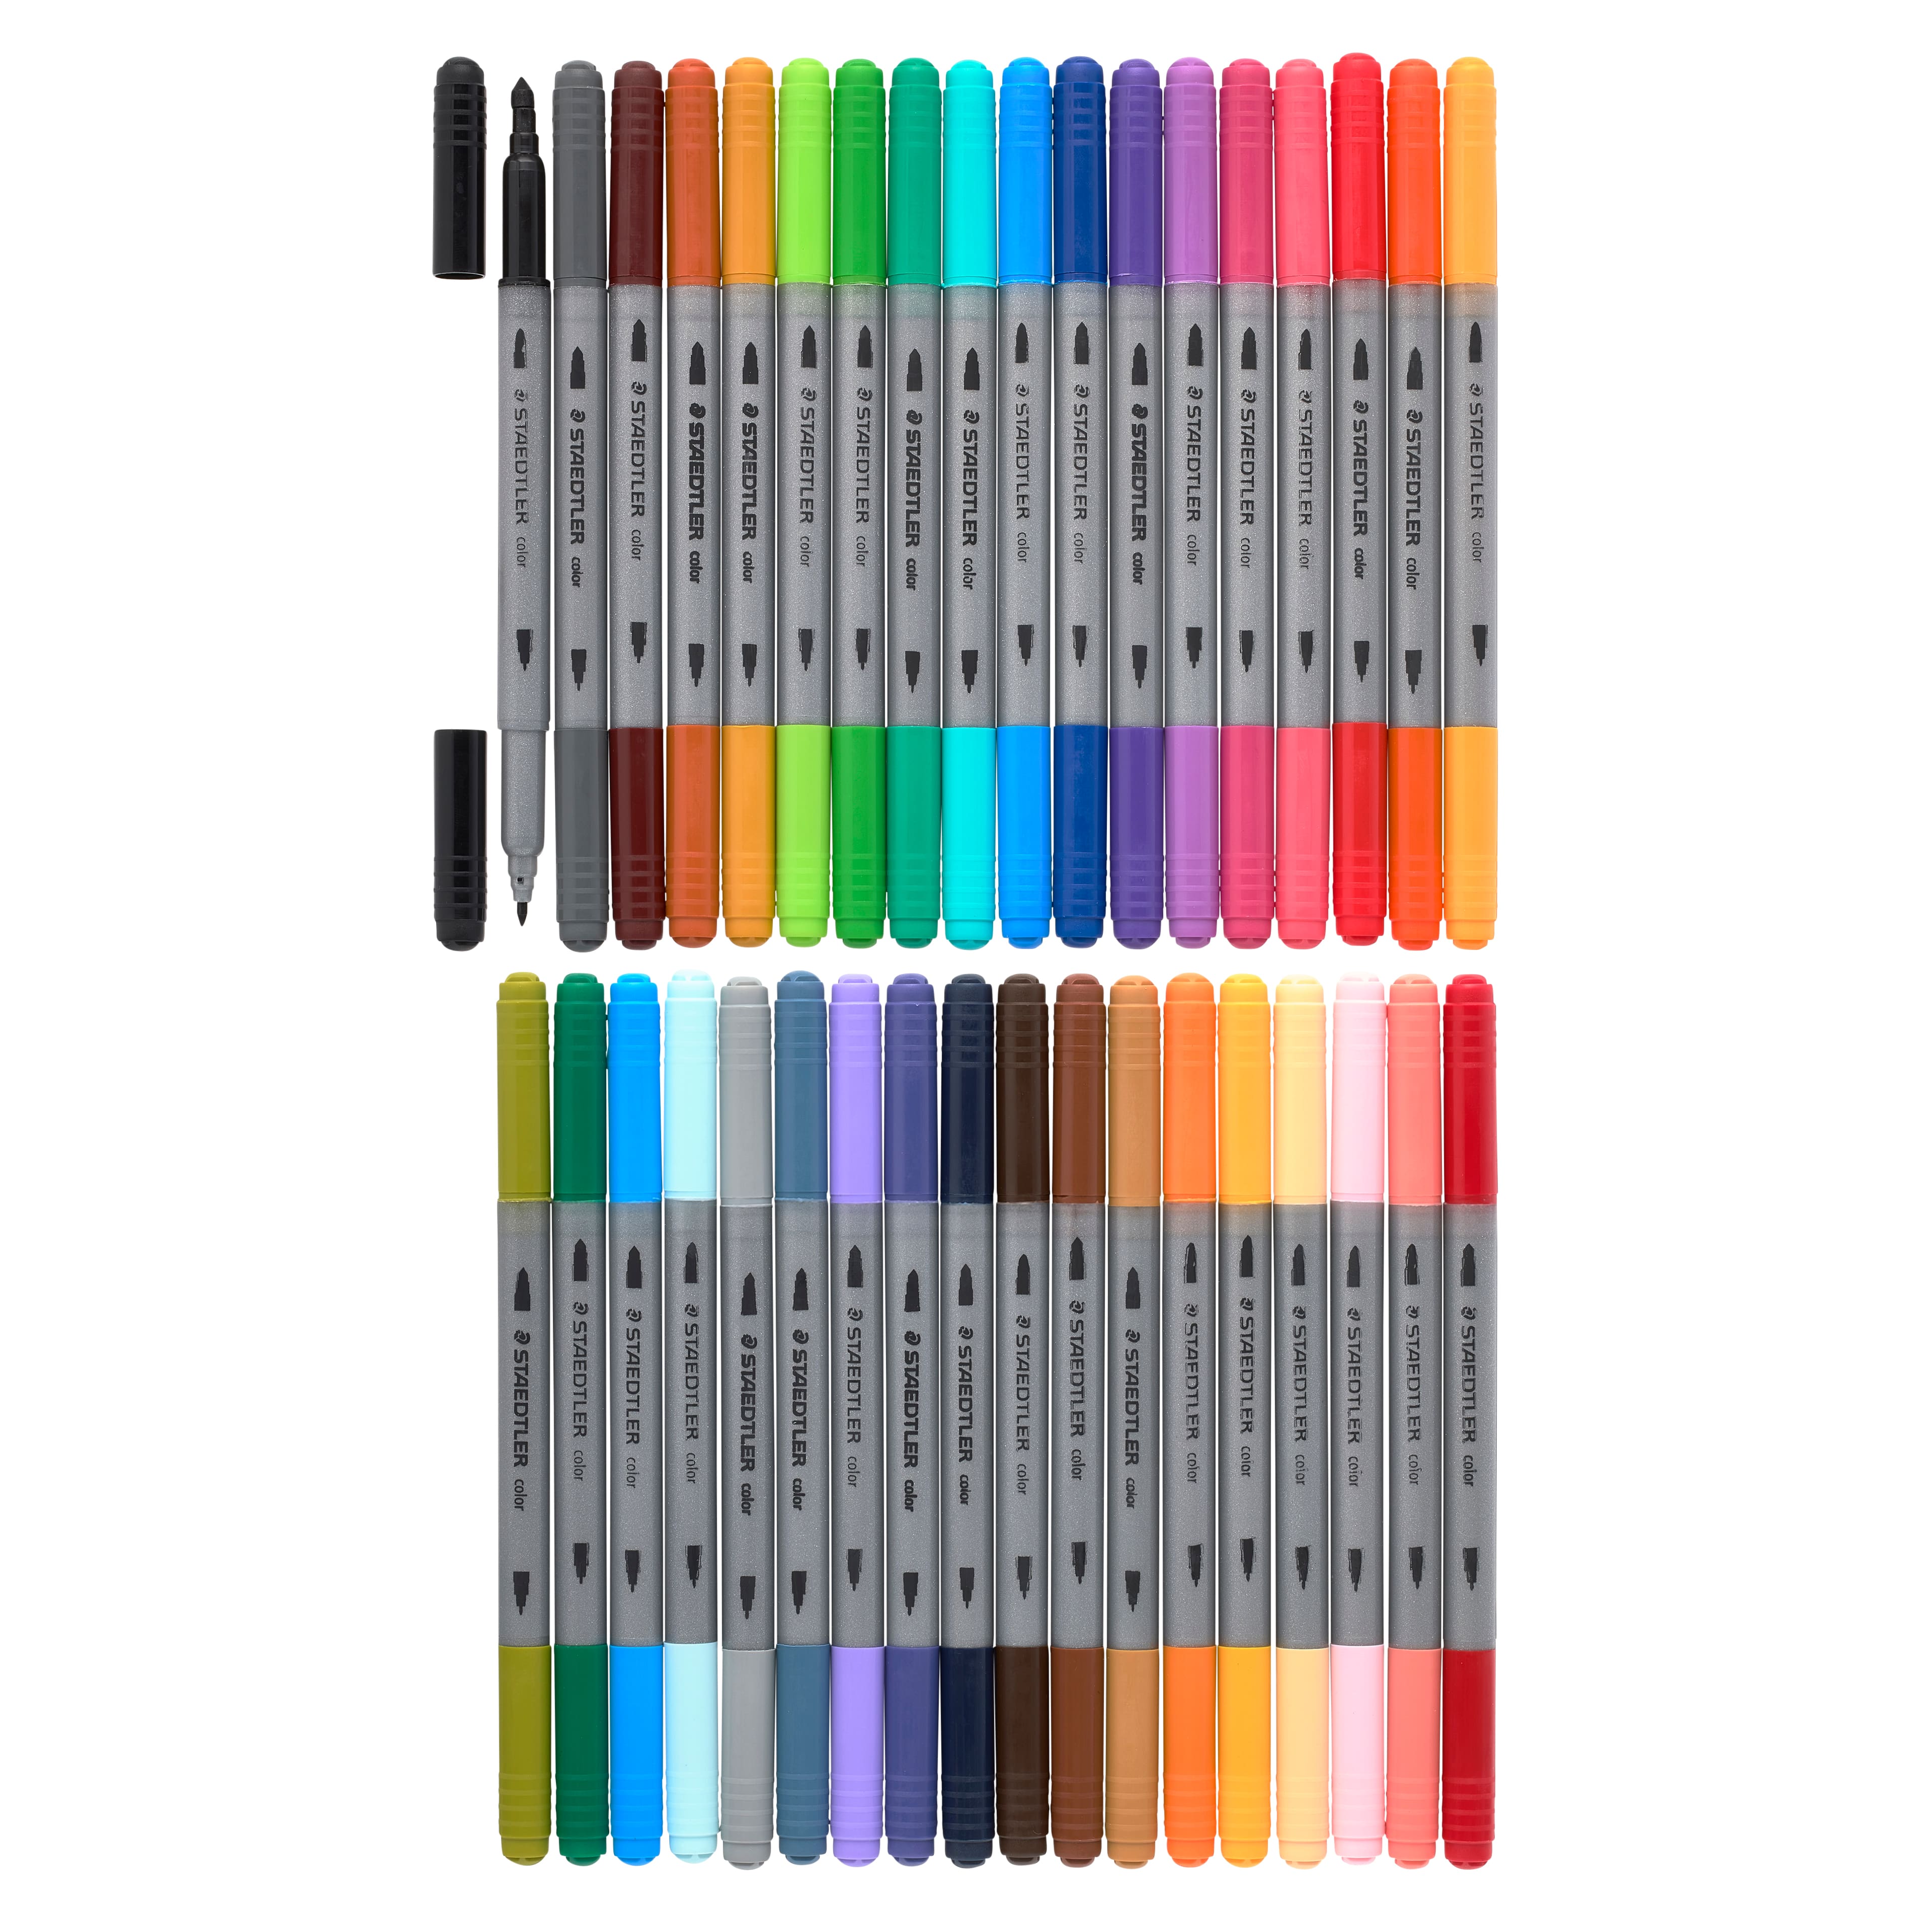 Swatch Form: POSCA Colored Pencils (36pc.)